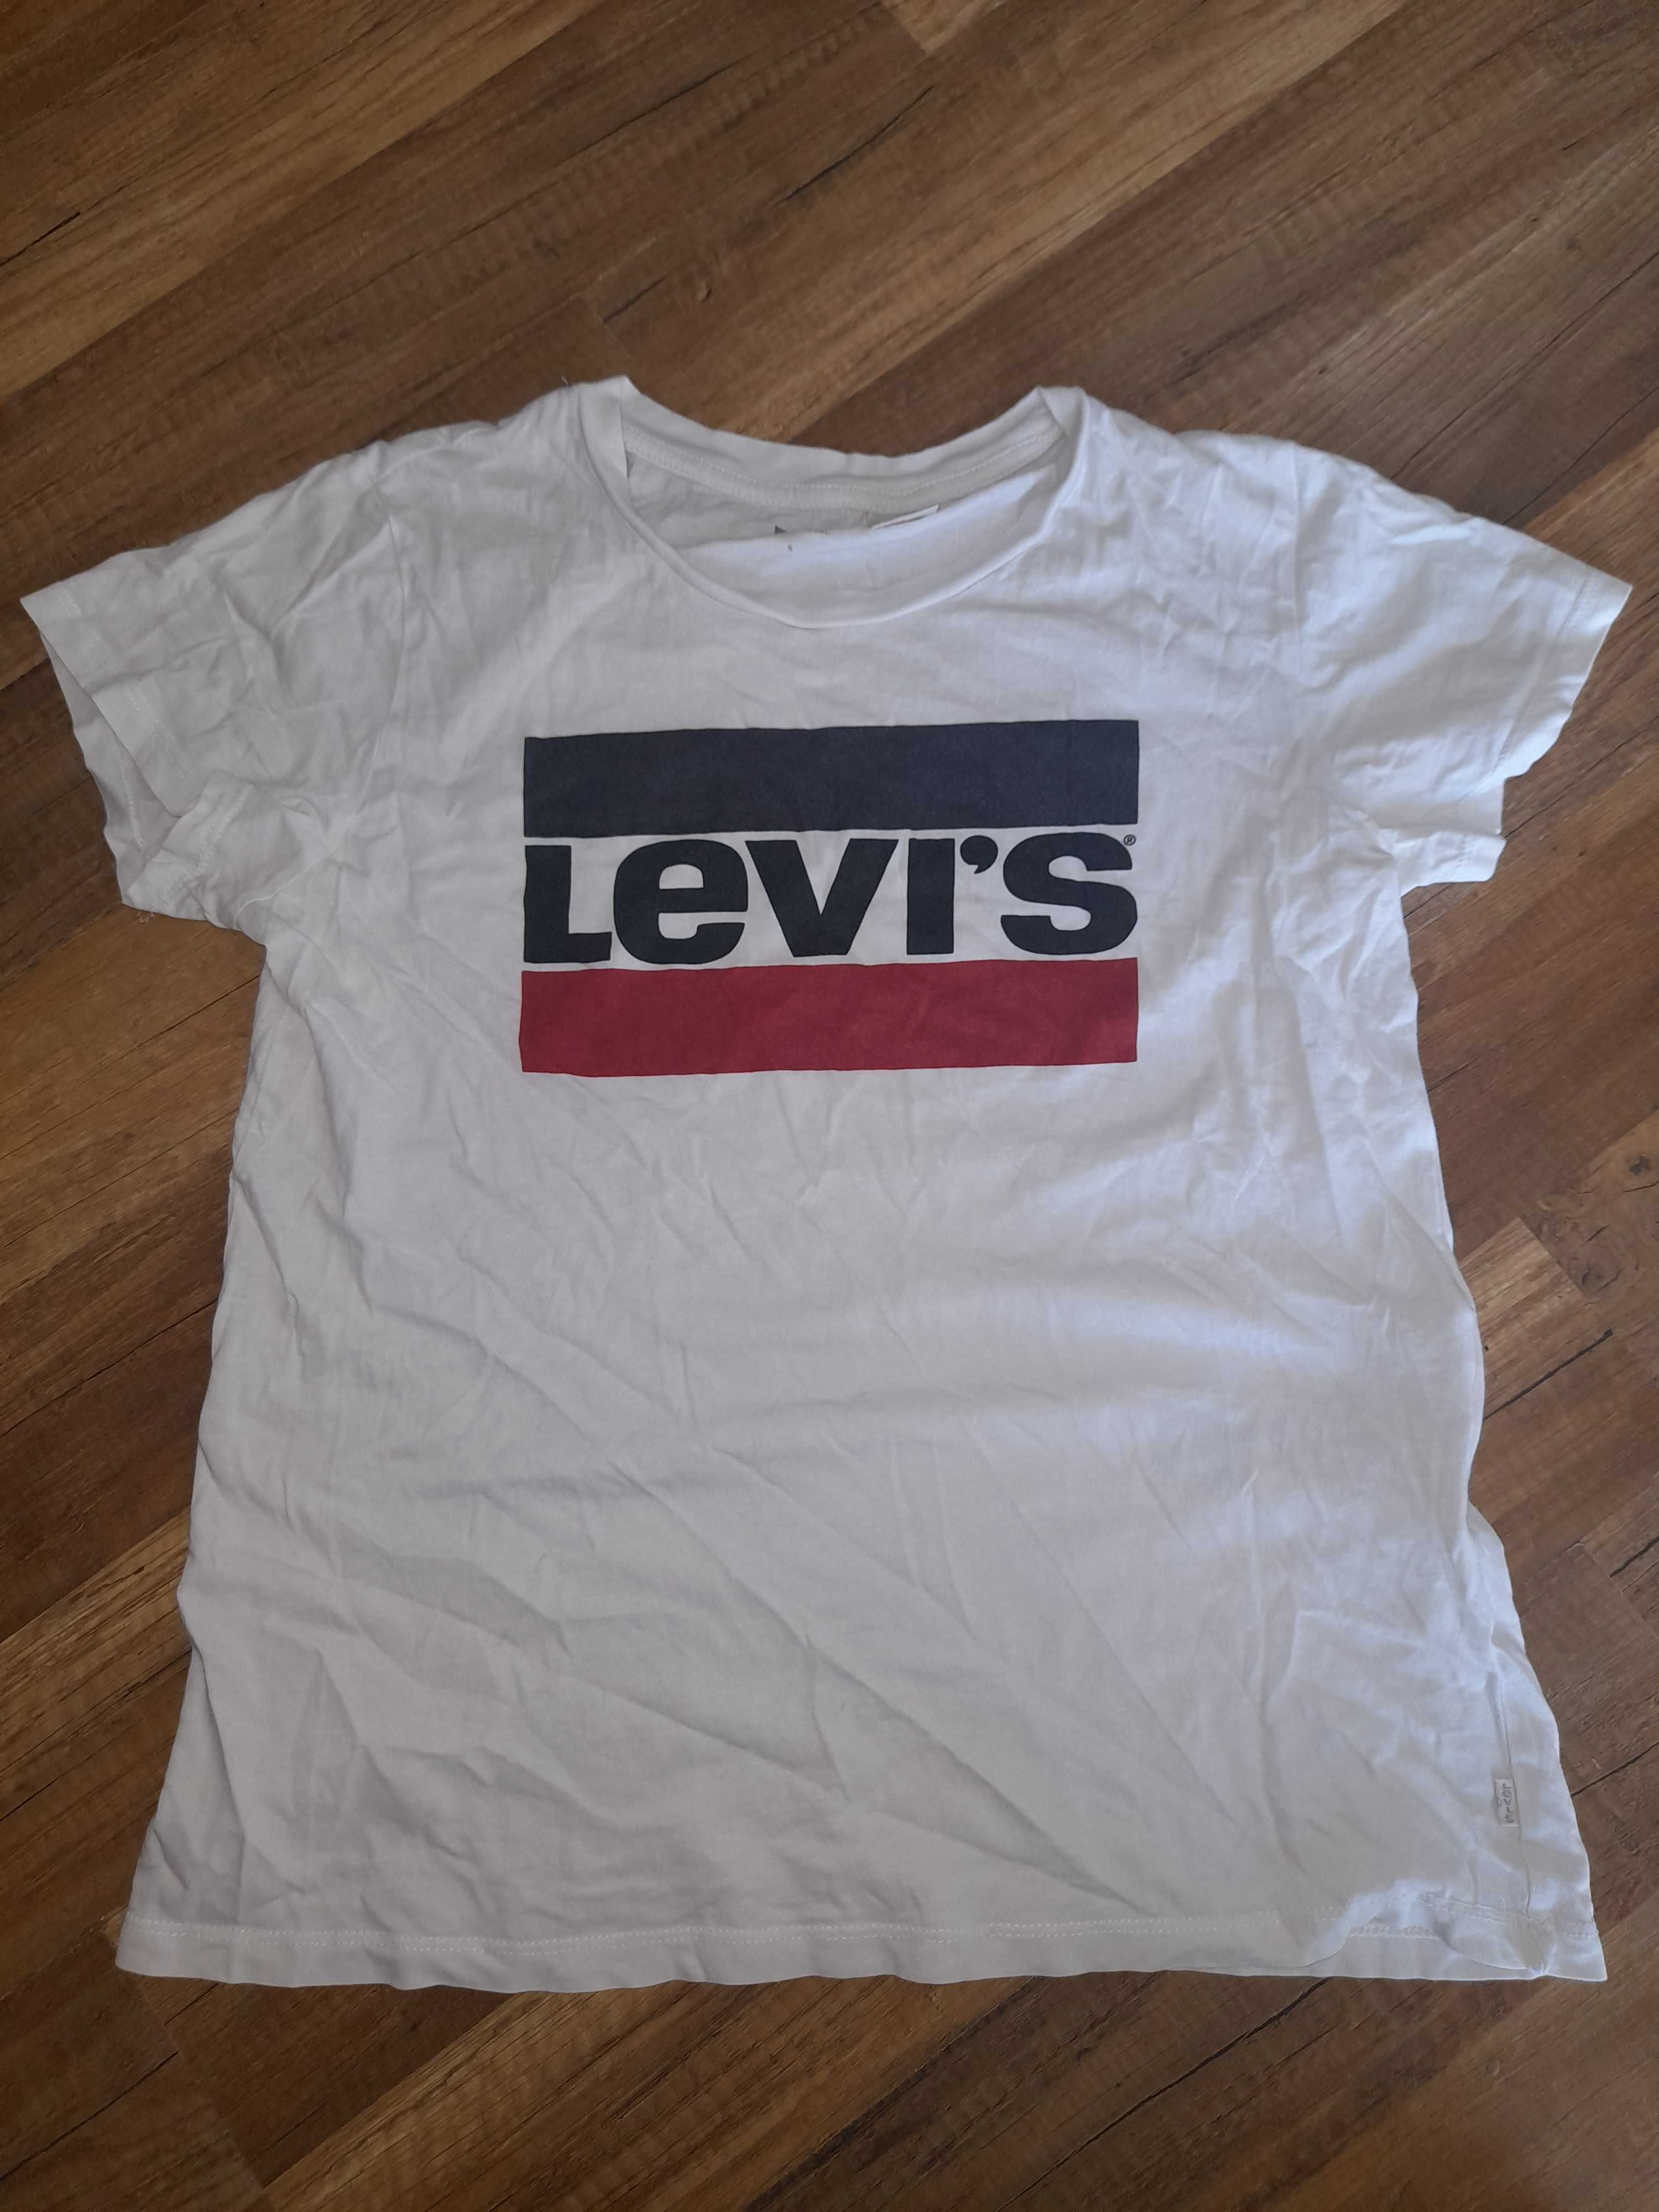 Levis t-shirt S biała koszulka damska Jasło • OLX.pl